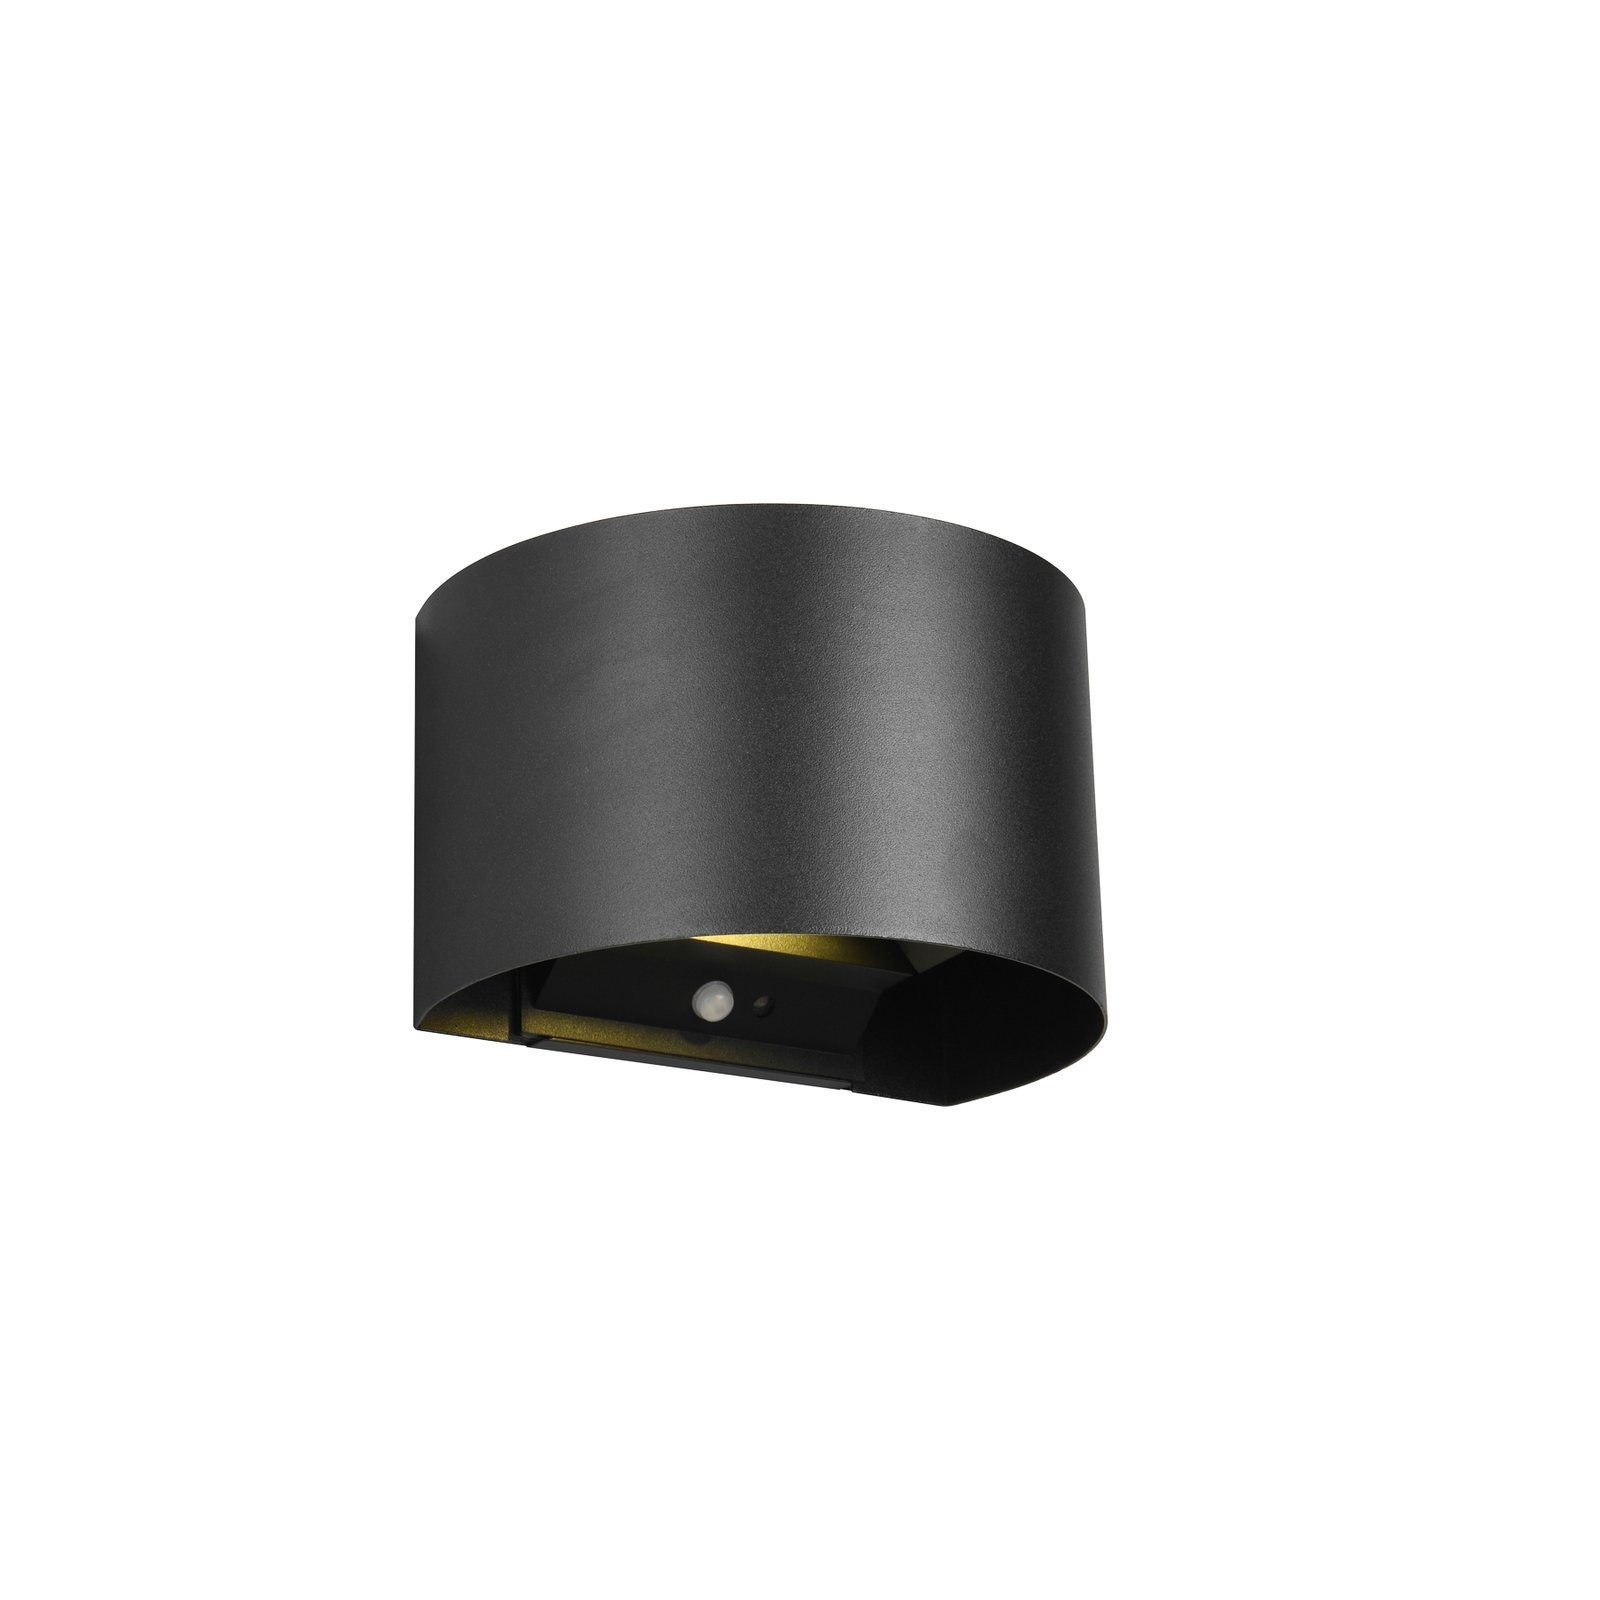 LED outdoor wall lamp Talent, black, width 16 cm Sensor